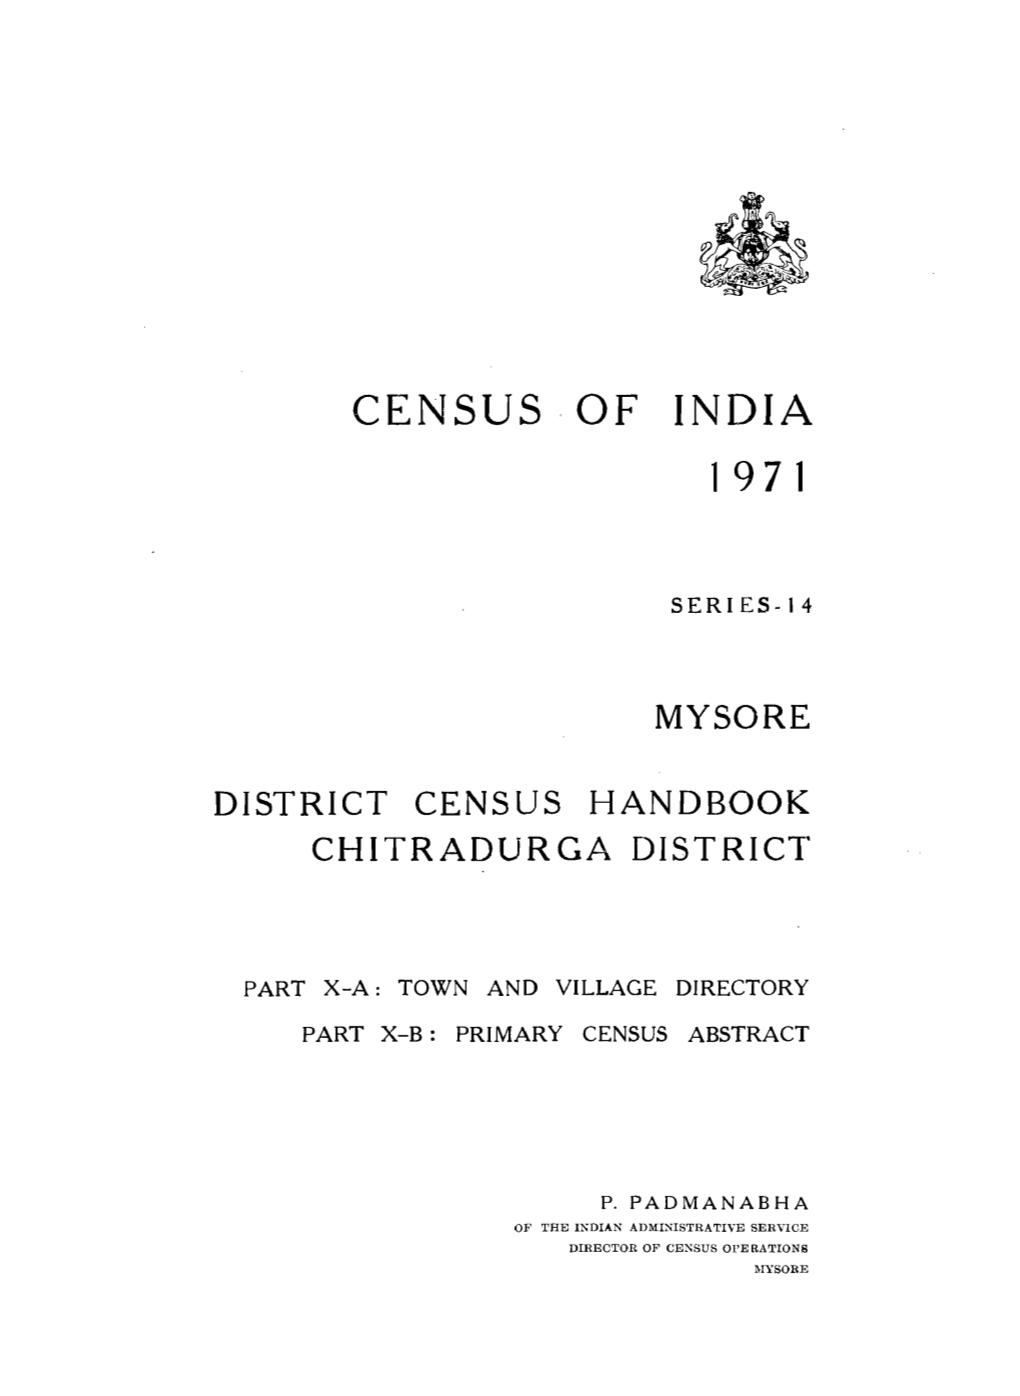 District Census Handbook, Chitradurga, Part X-A, B, Series-14,Mysore